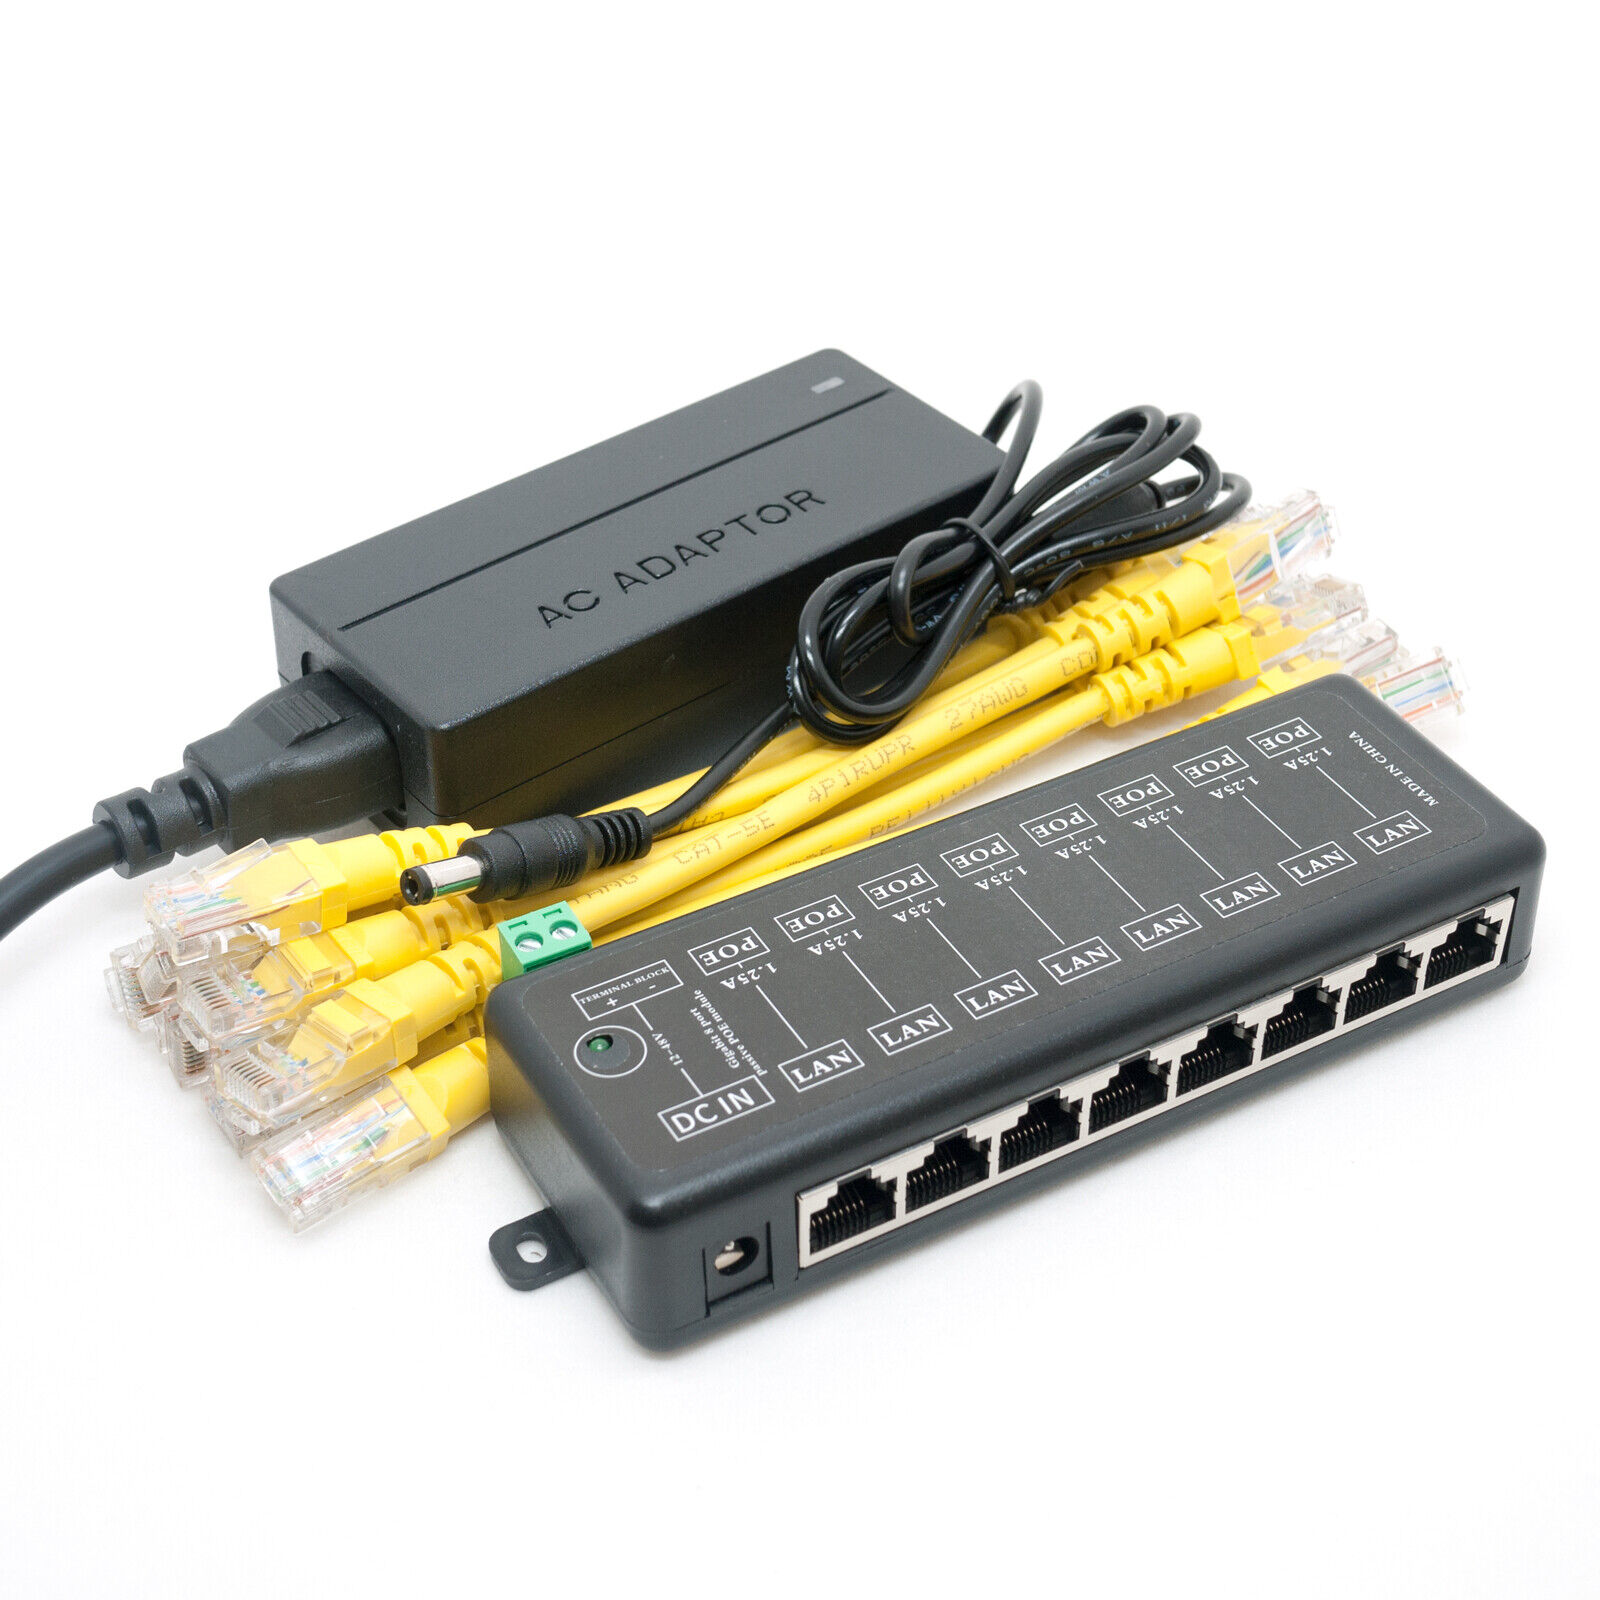 8 Ports Gigabit Passive PoE injector midspan Ethernet Adapter 48V3A 144Watt PSU